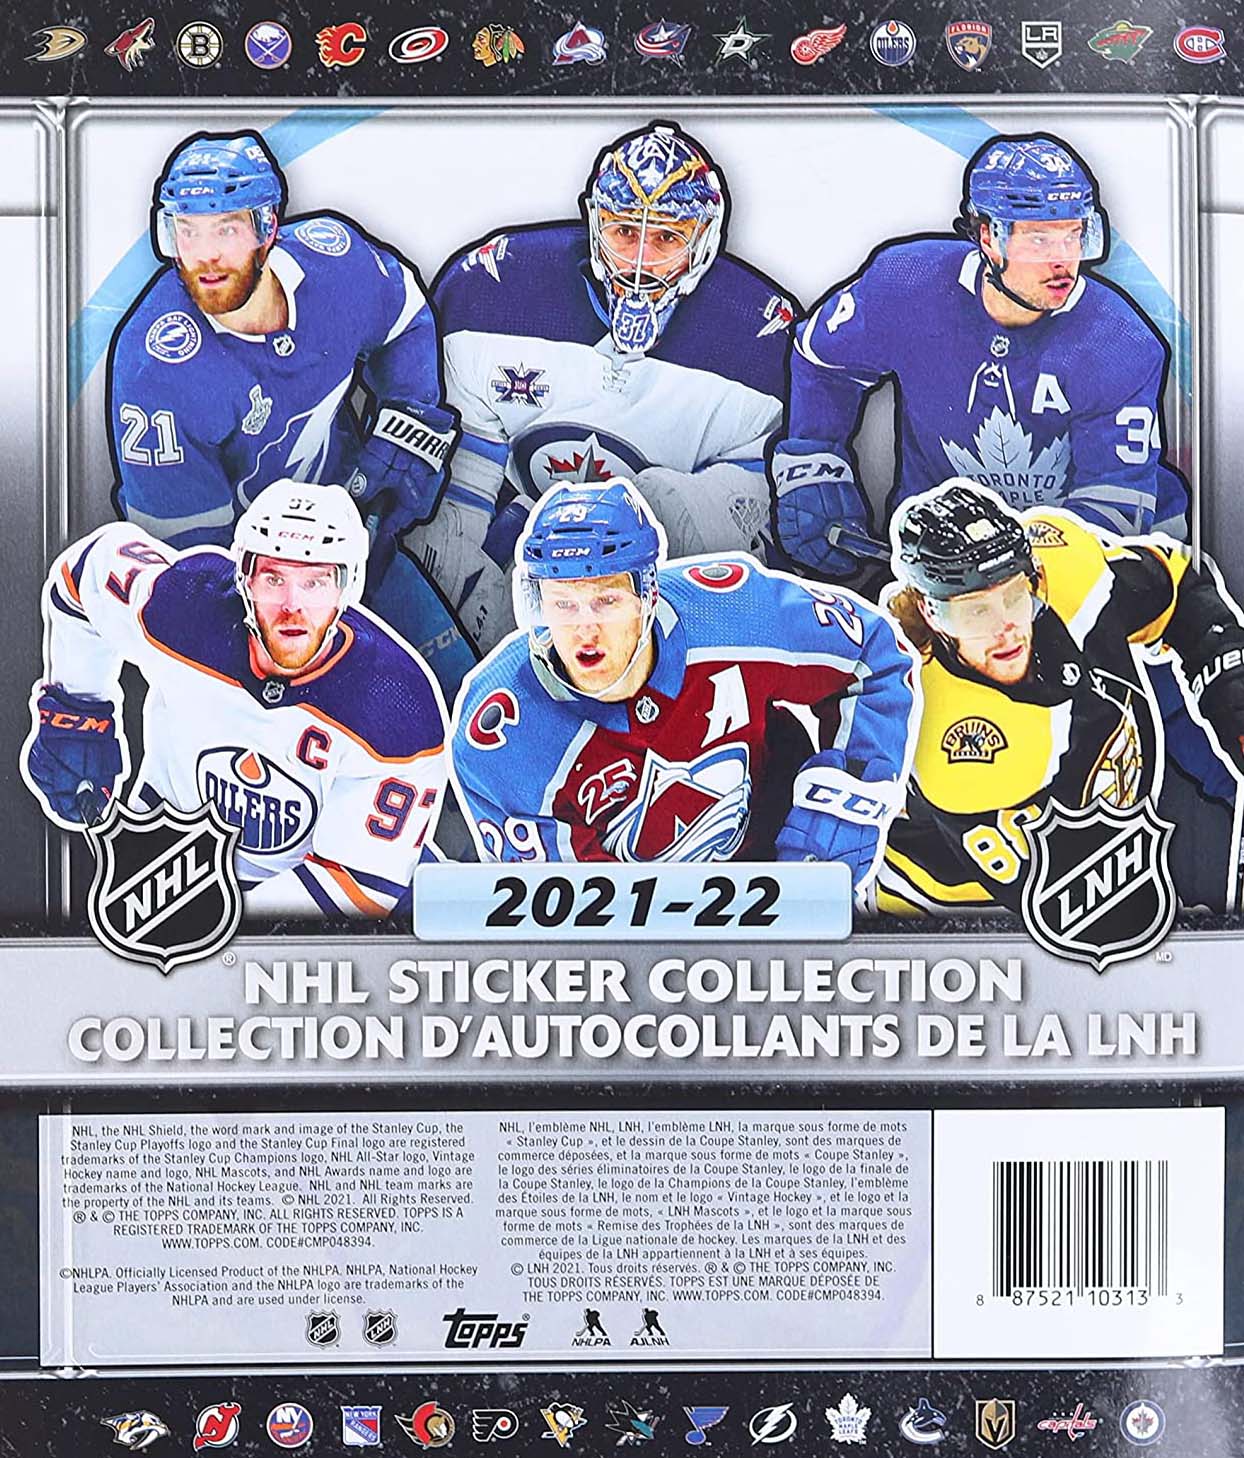 NHL Topps 2019-20 Hockey Sticker Collection Album